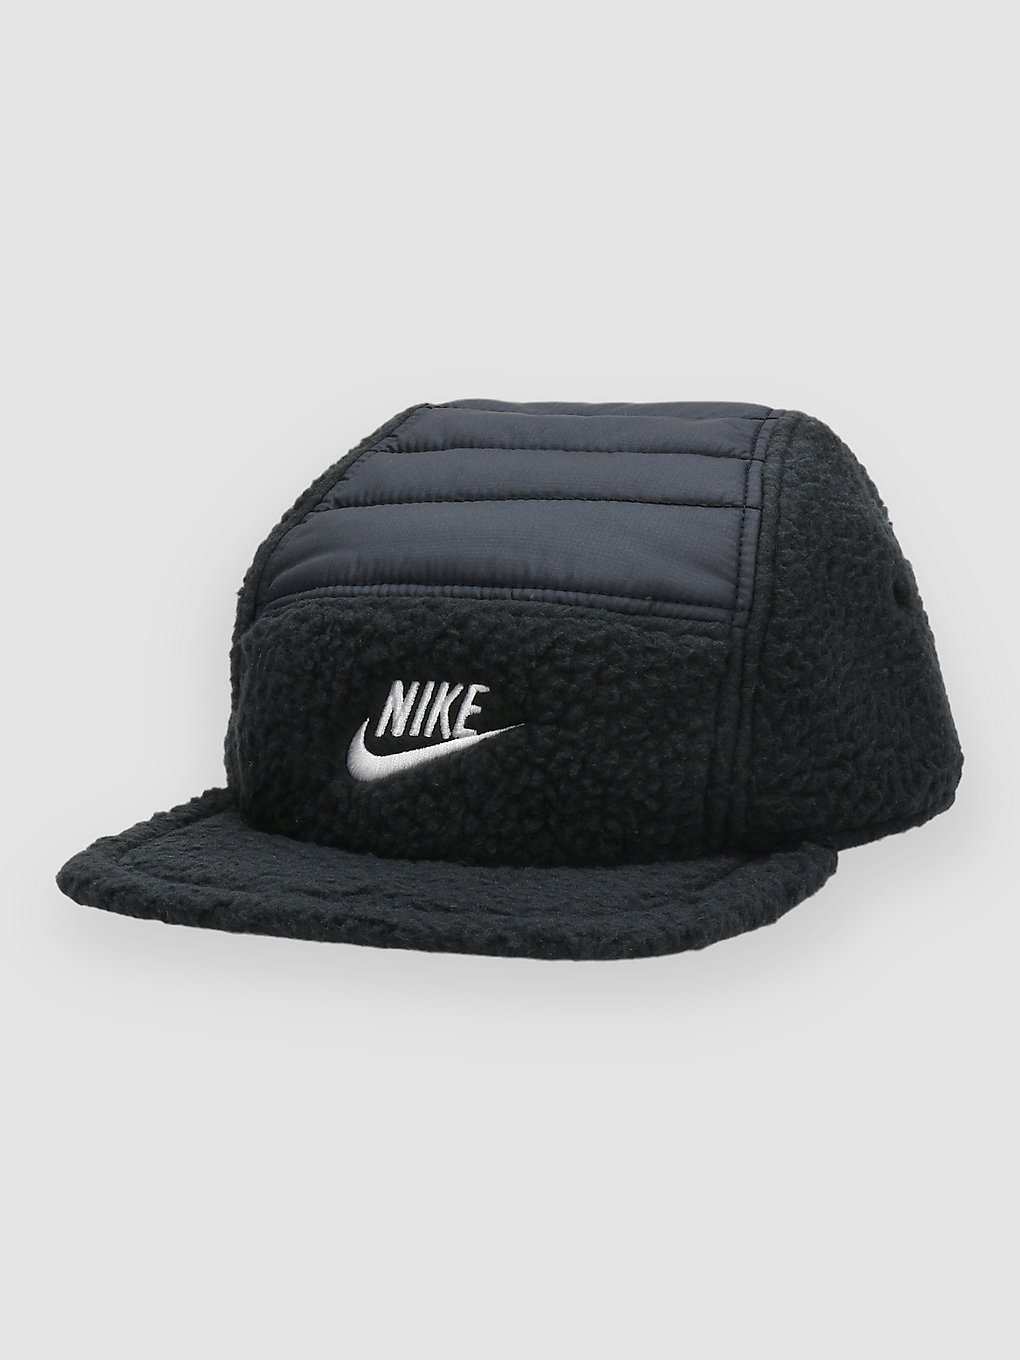 Nike Fly Fb Outdoor L Cap black kaufen